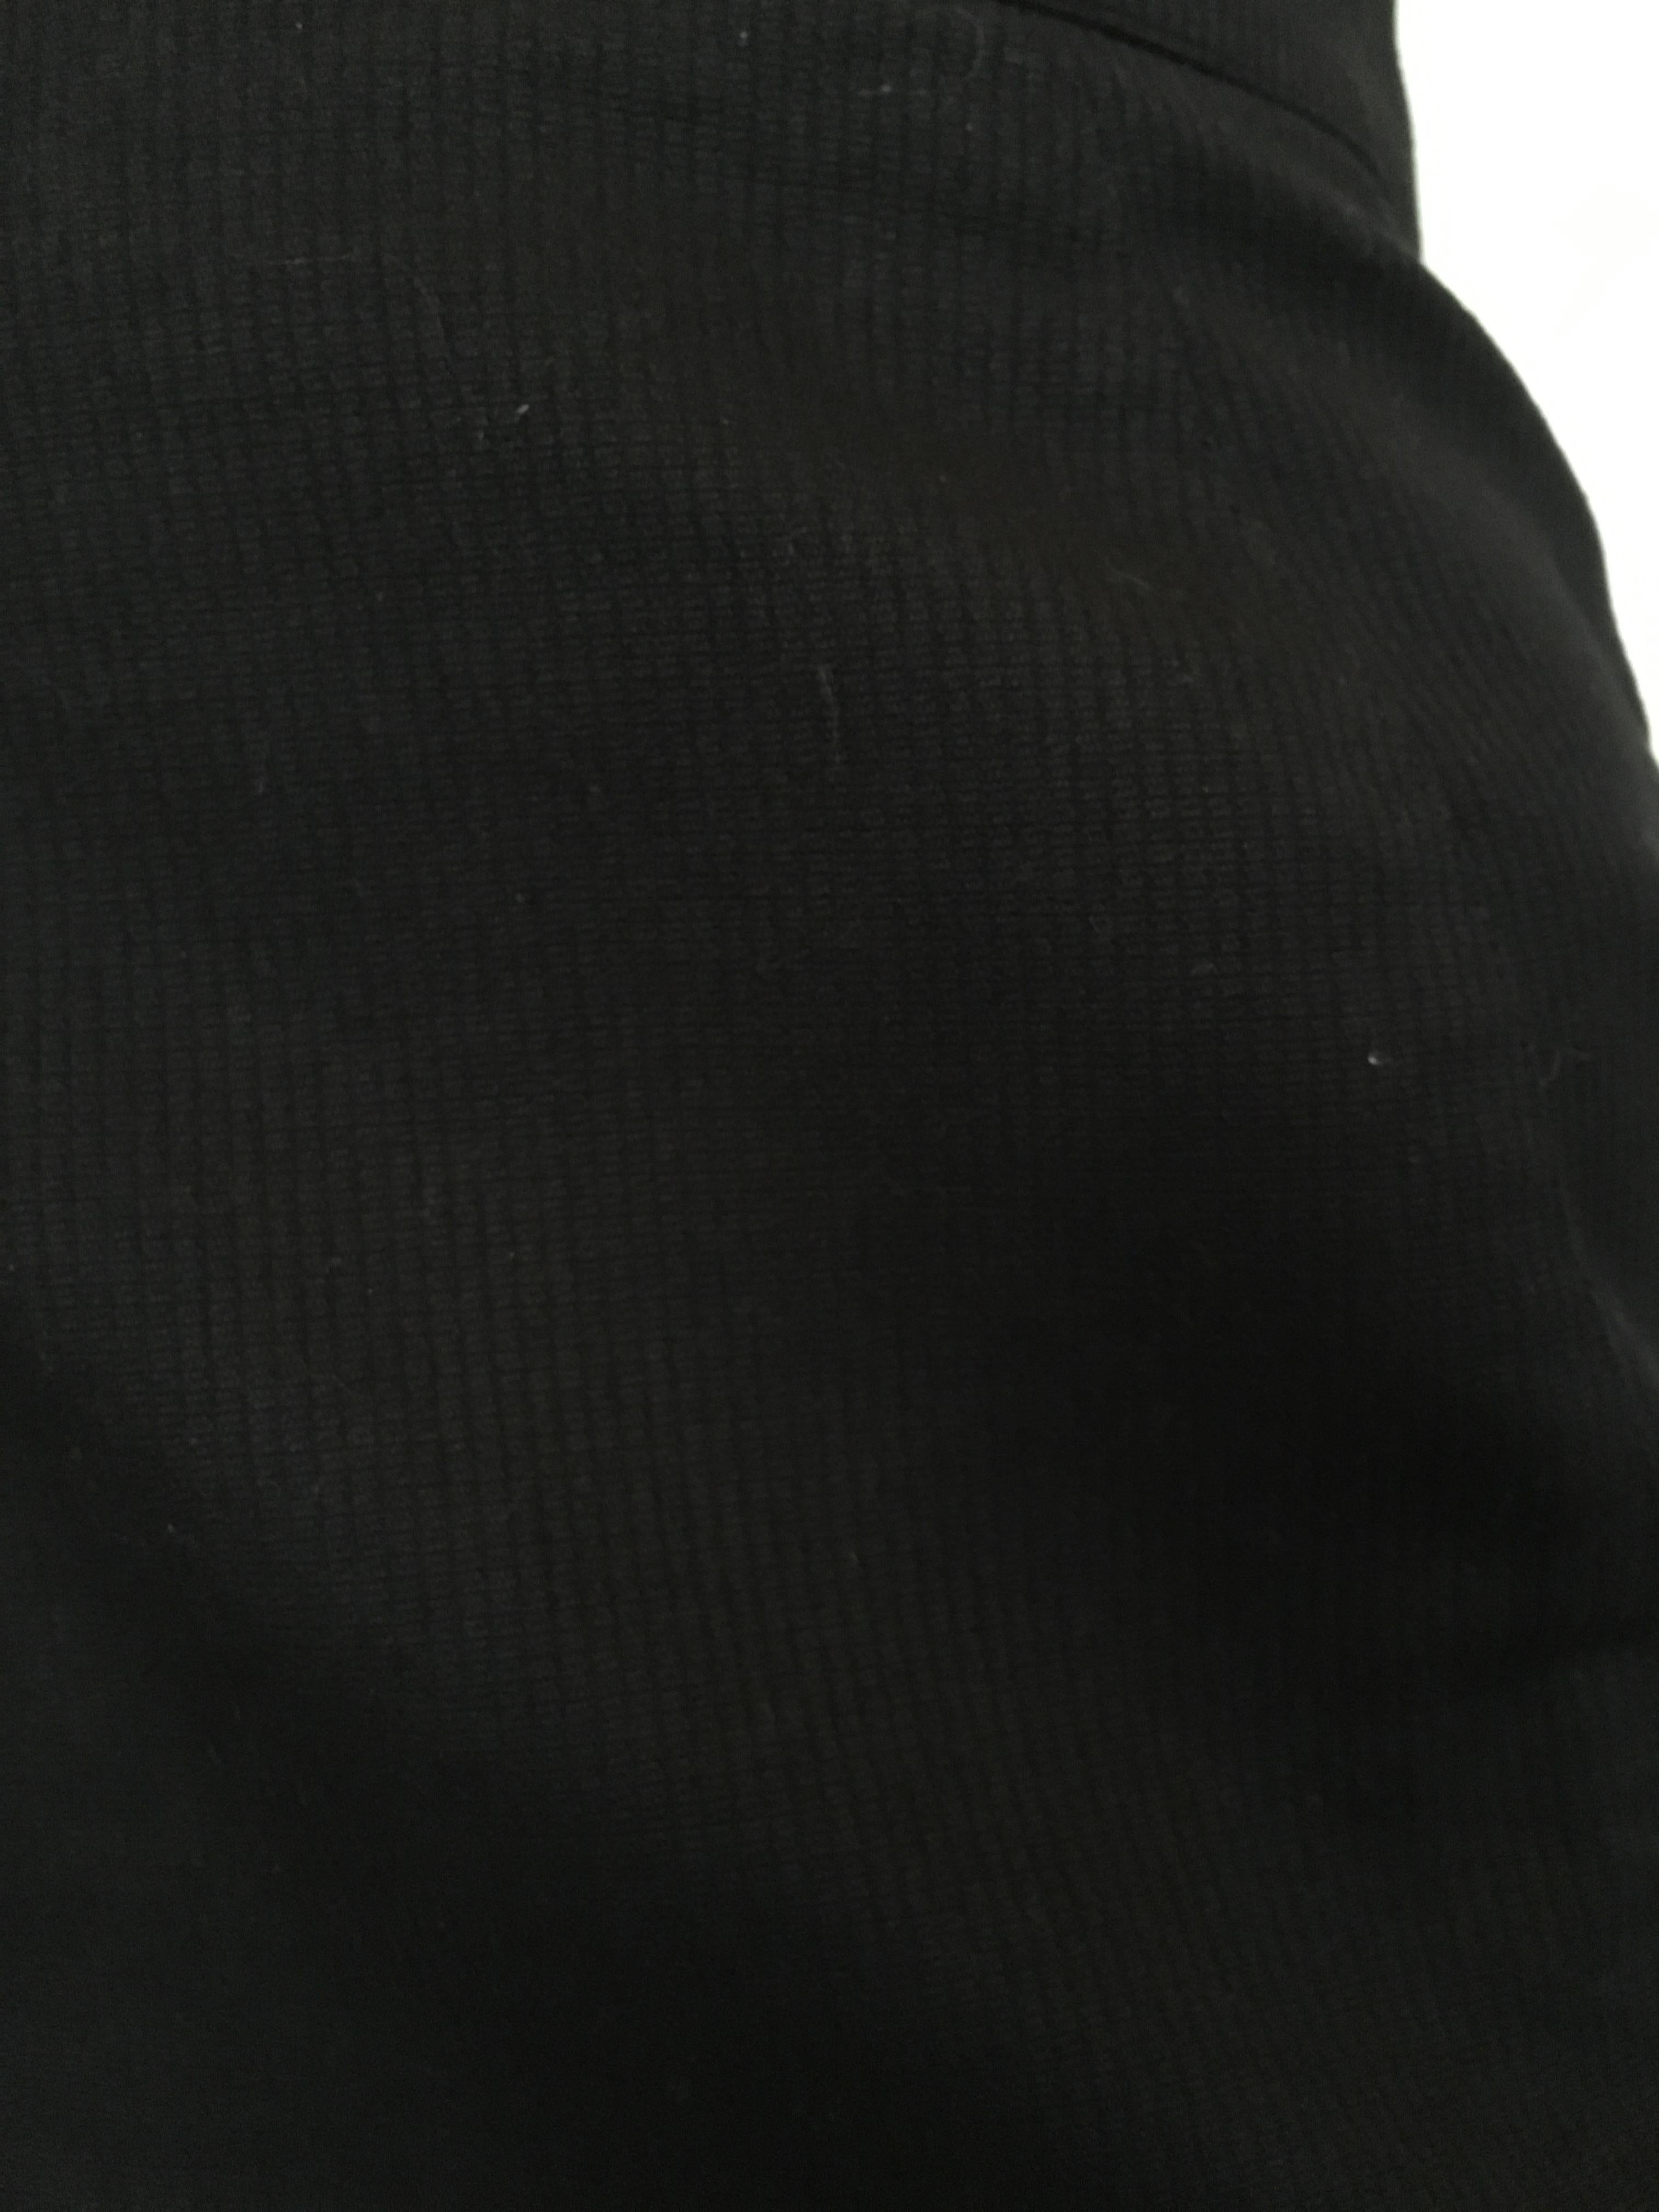 Women's or Men's Thierry Mugler 1990s Black Cotton Short Skirt Size 2. For Sale